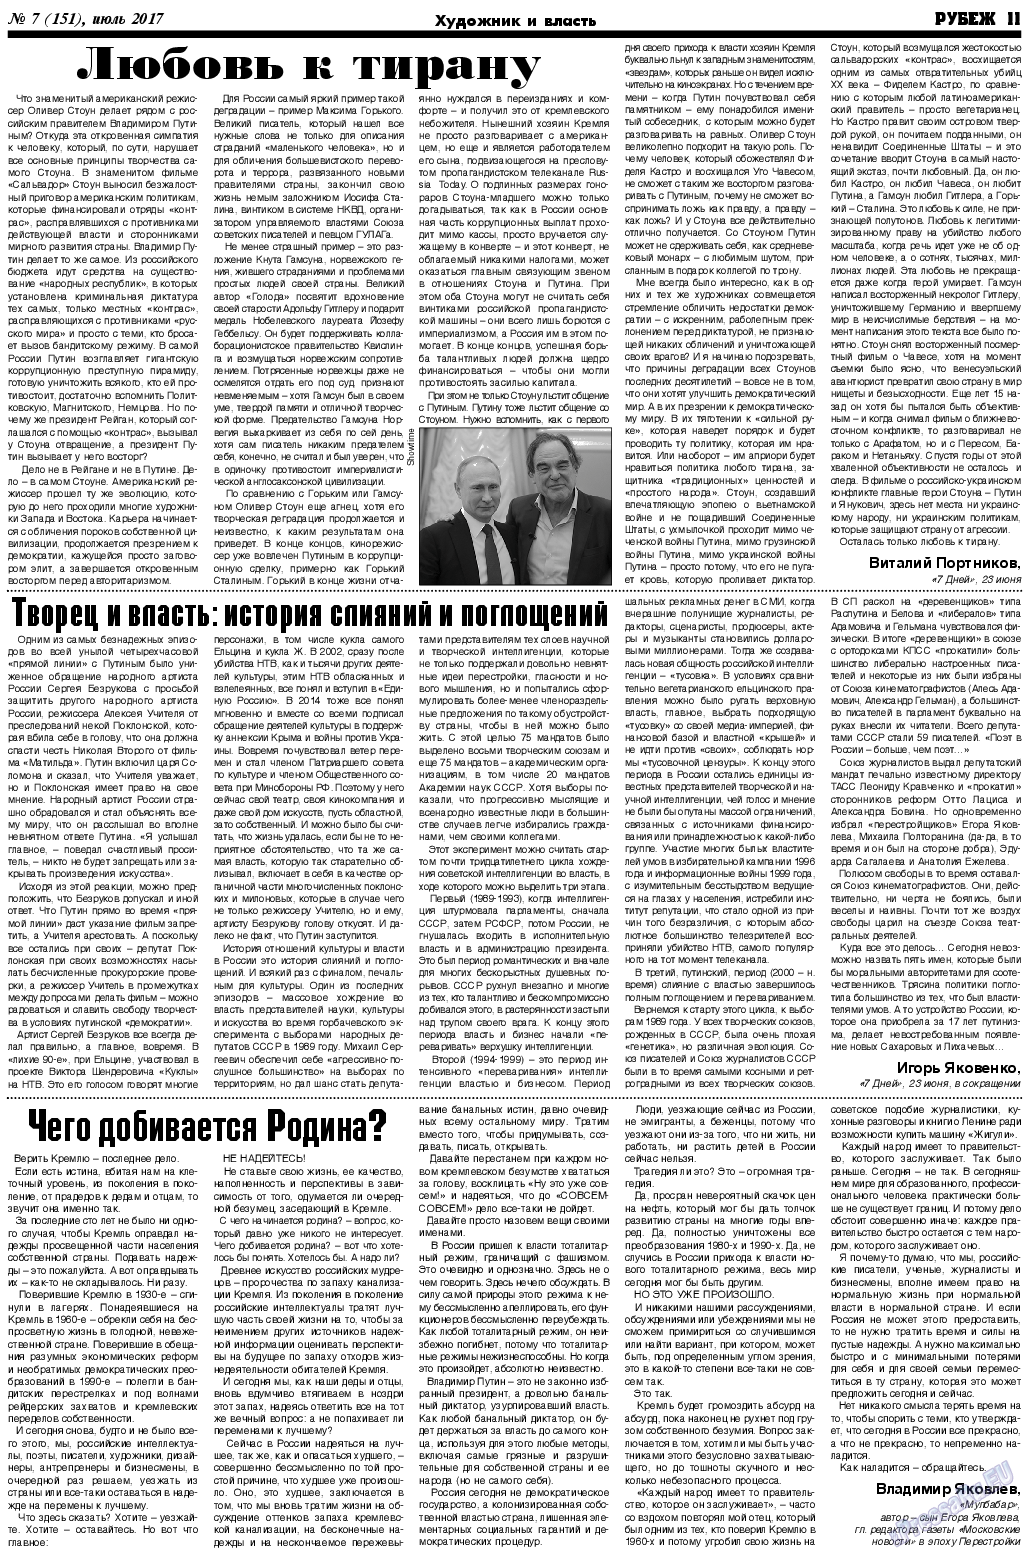 Рубеж, газета. 2017 №7 стр.11